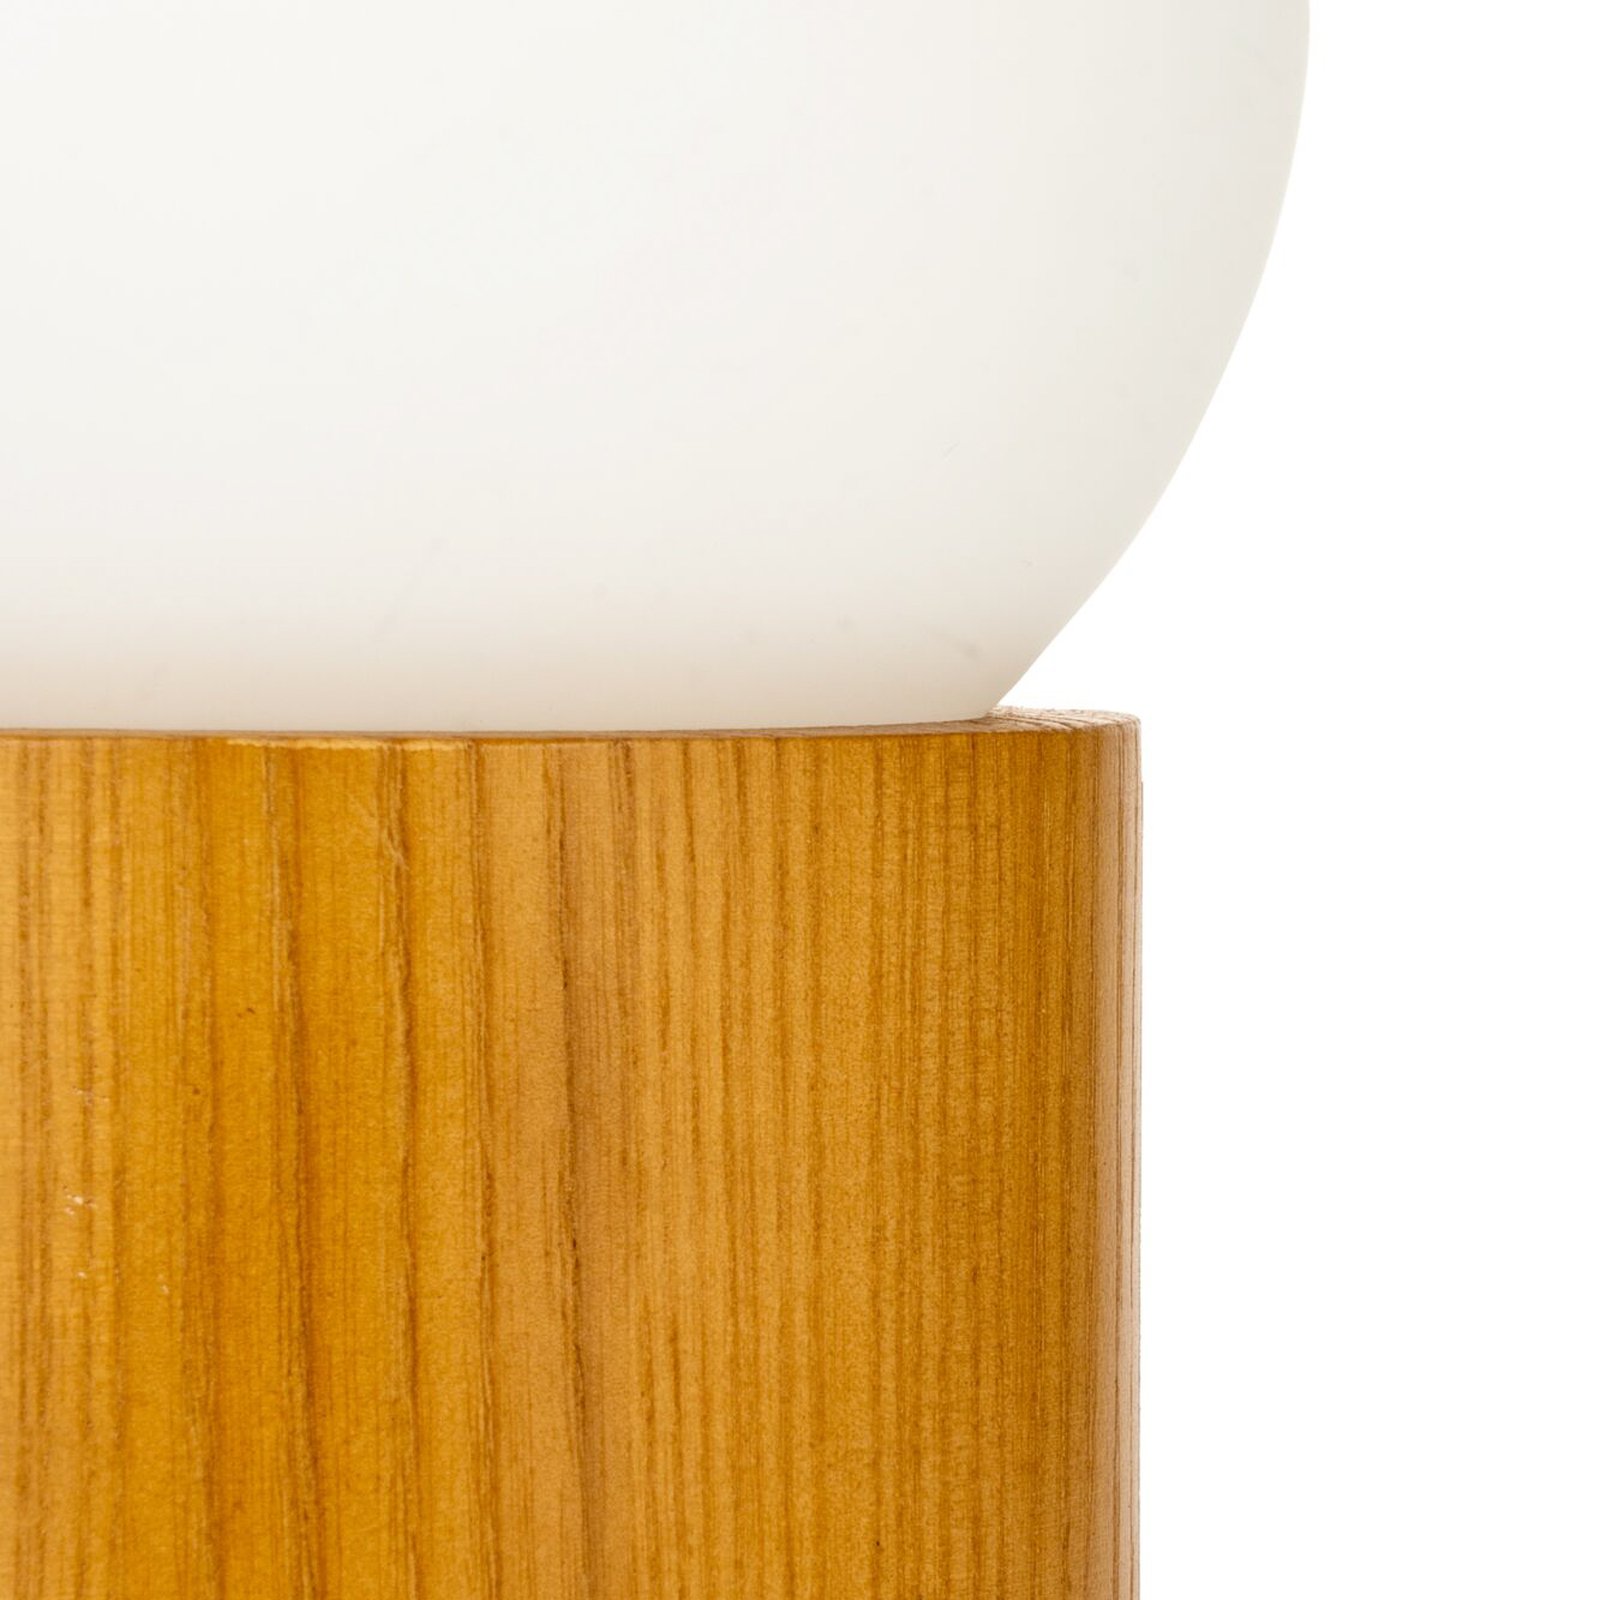 Pauleen Woody Shine stolní lampa, dřevo, sklo